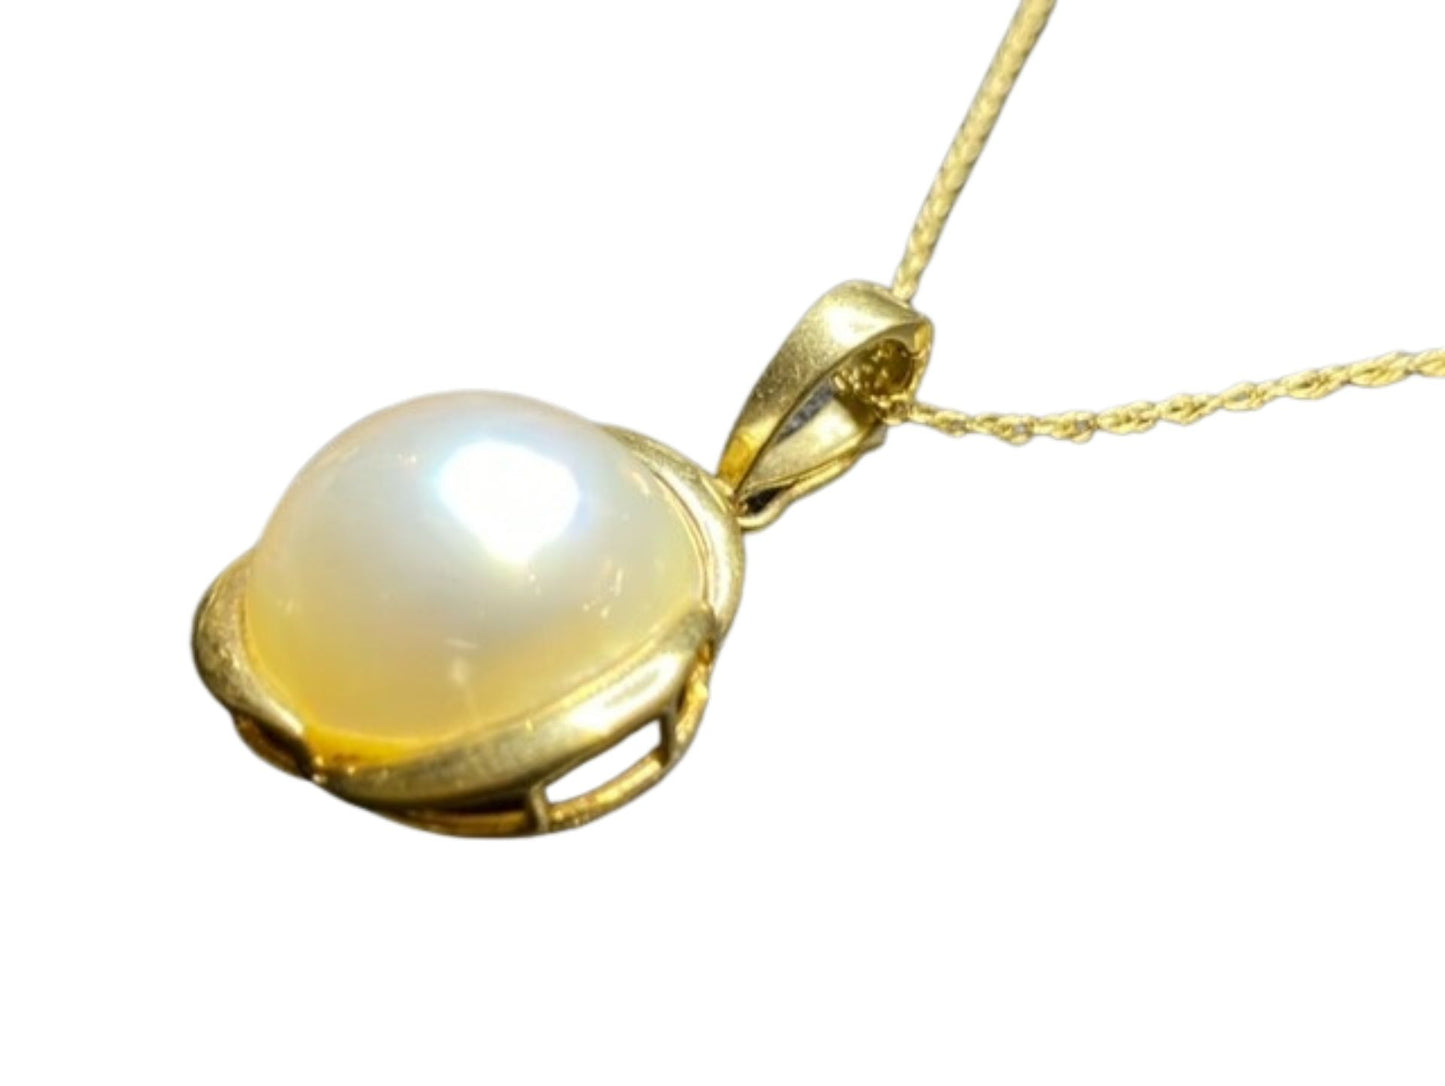 14k Yellow Gold Pearl Pendant